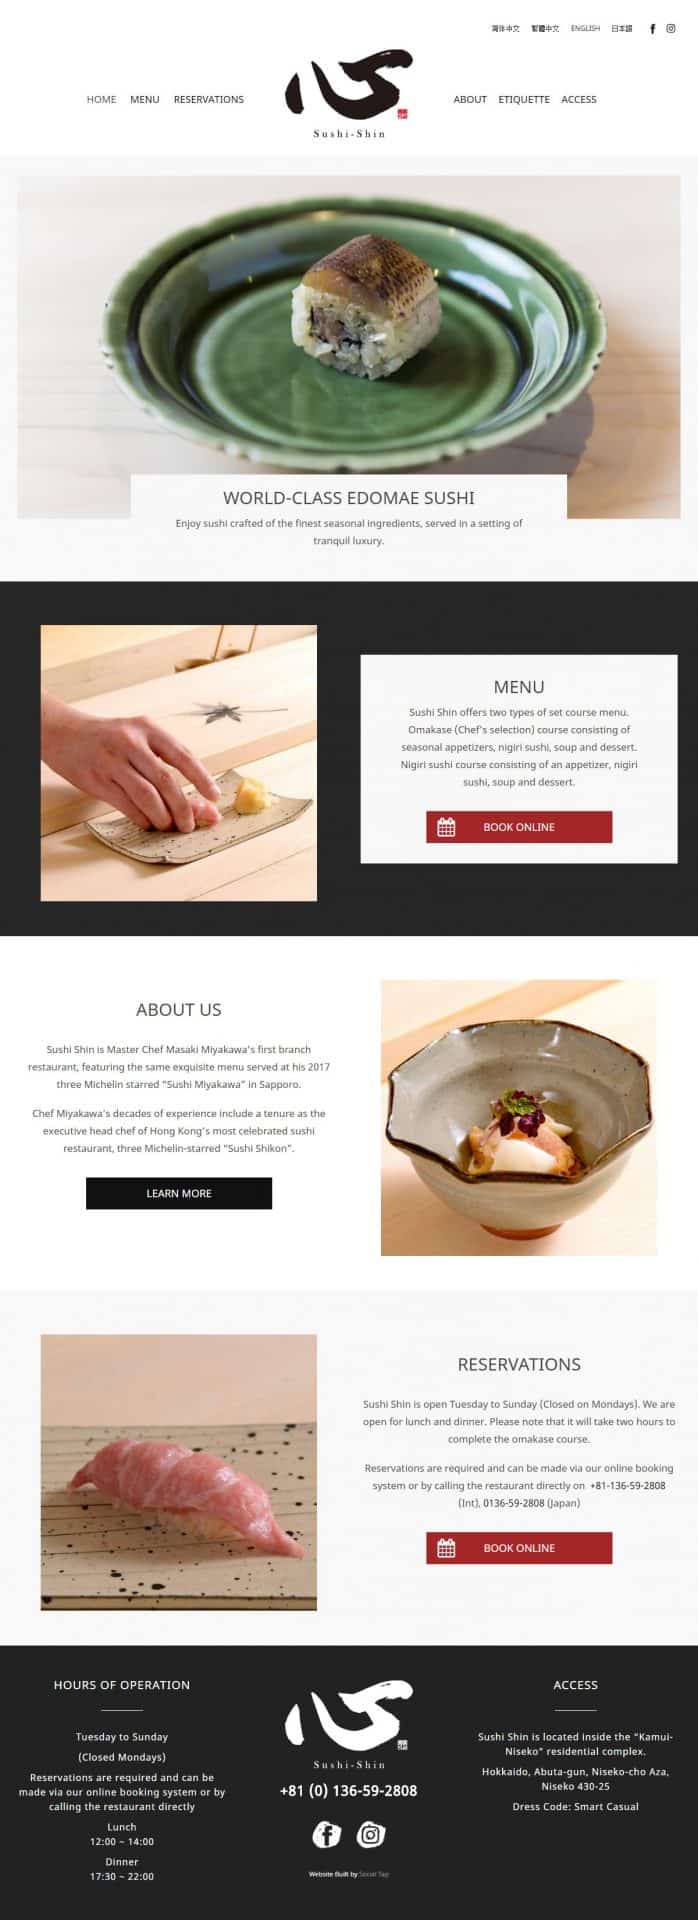 Hospitality Tourism Website Design Sushi Shin